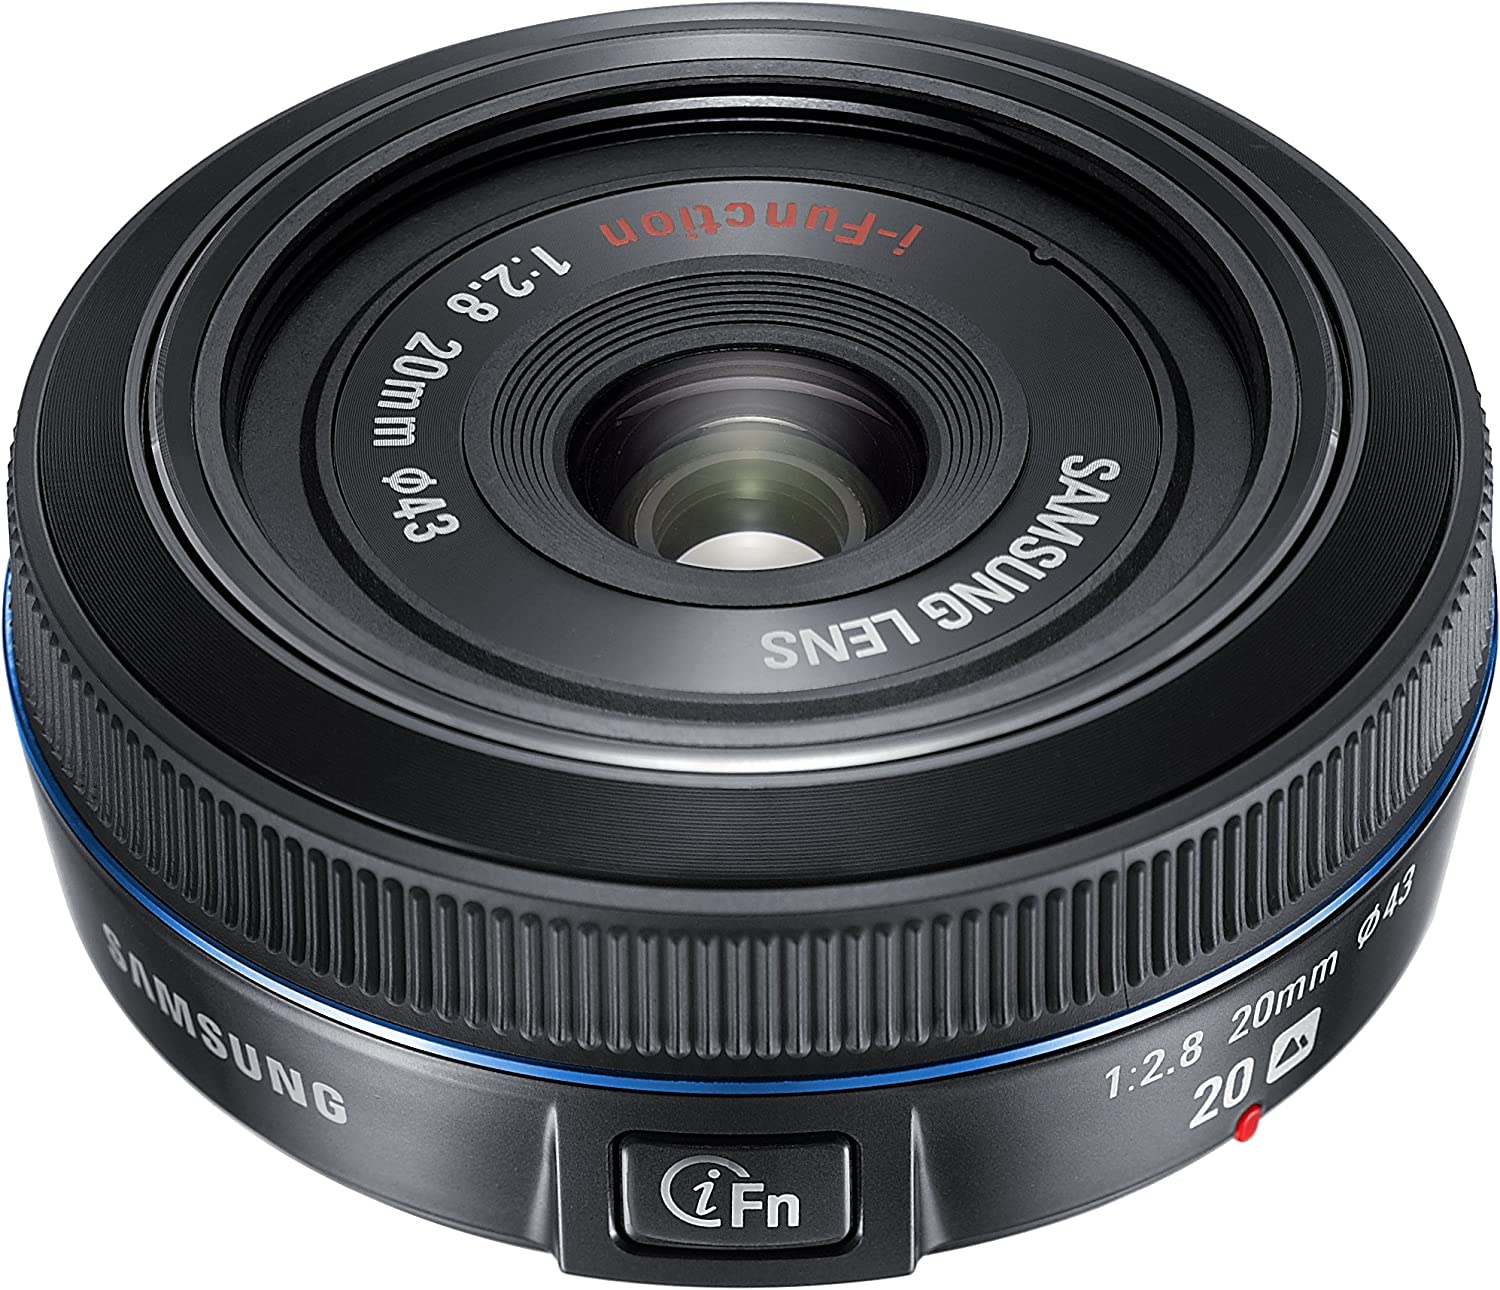 Samsung 20mm F/2.8 Wide Angle Lens For Samsung NX Cameras - (Black) (EX-W20NB)